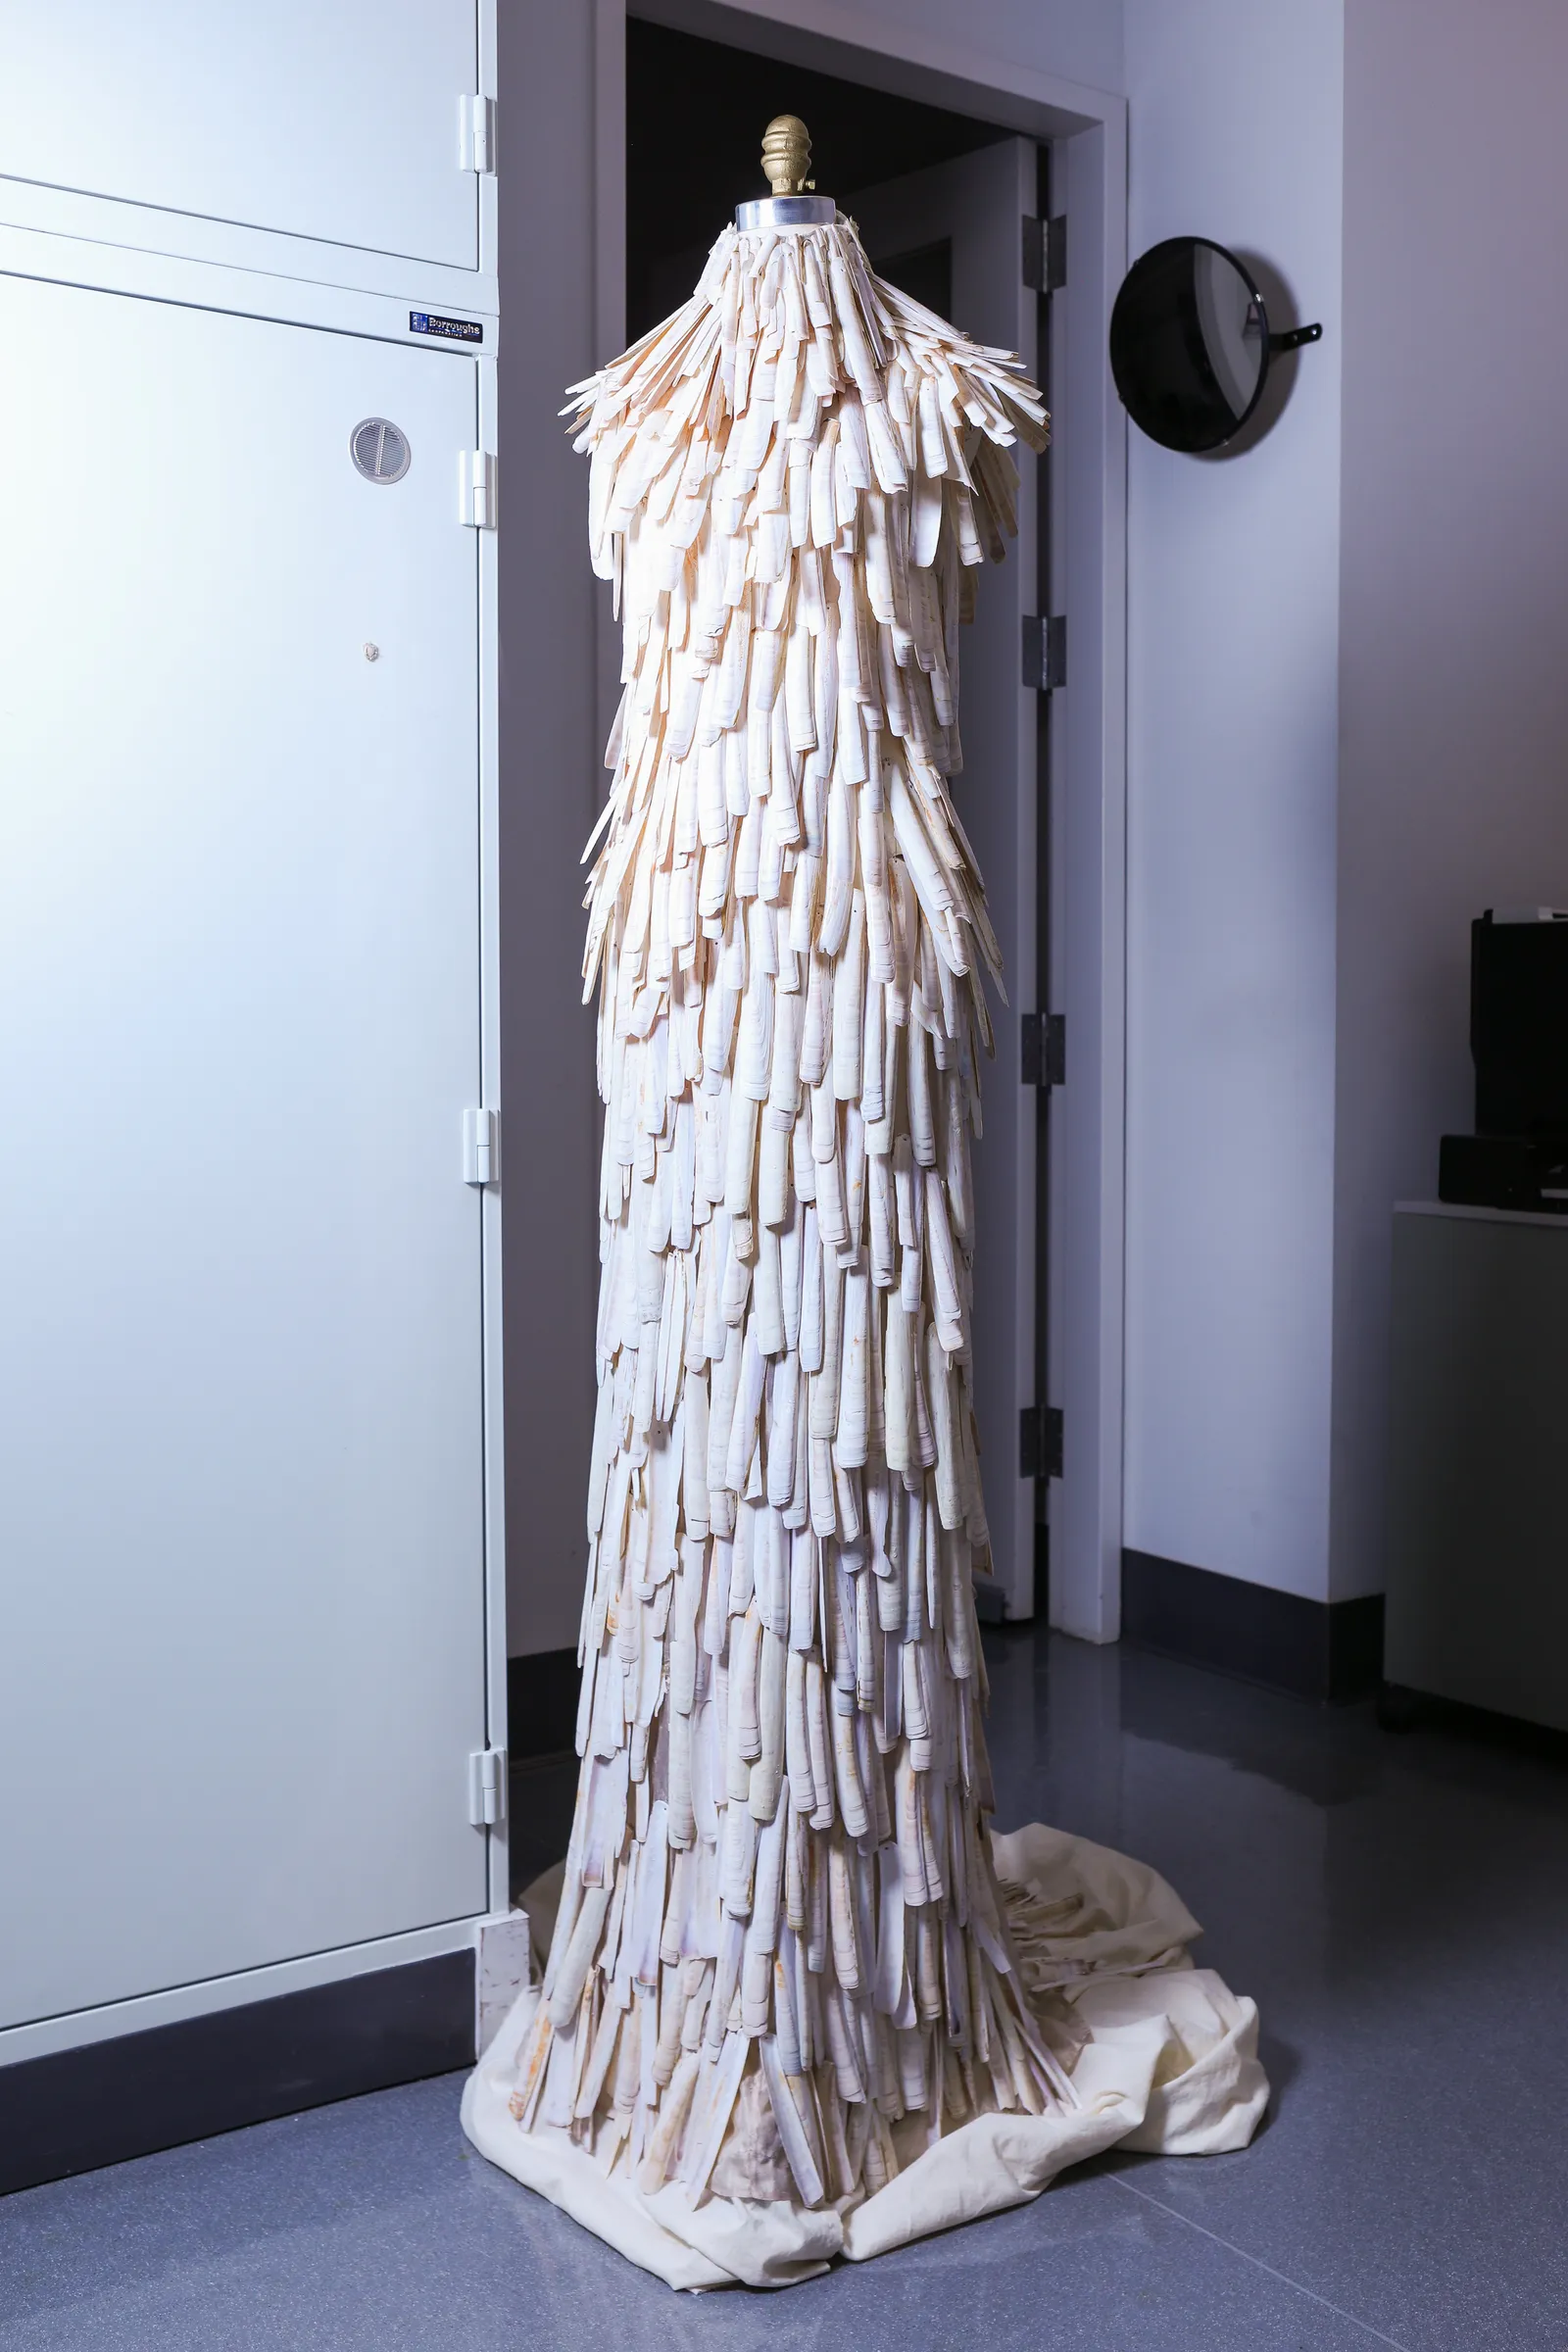 Sukienka, Alexander McQueen, wiosna 2001. (Fot. The Metropolitan Museum of Art)